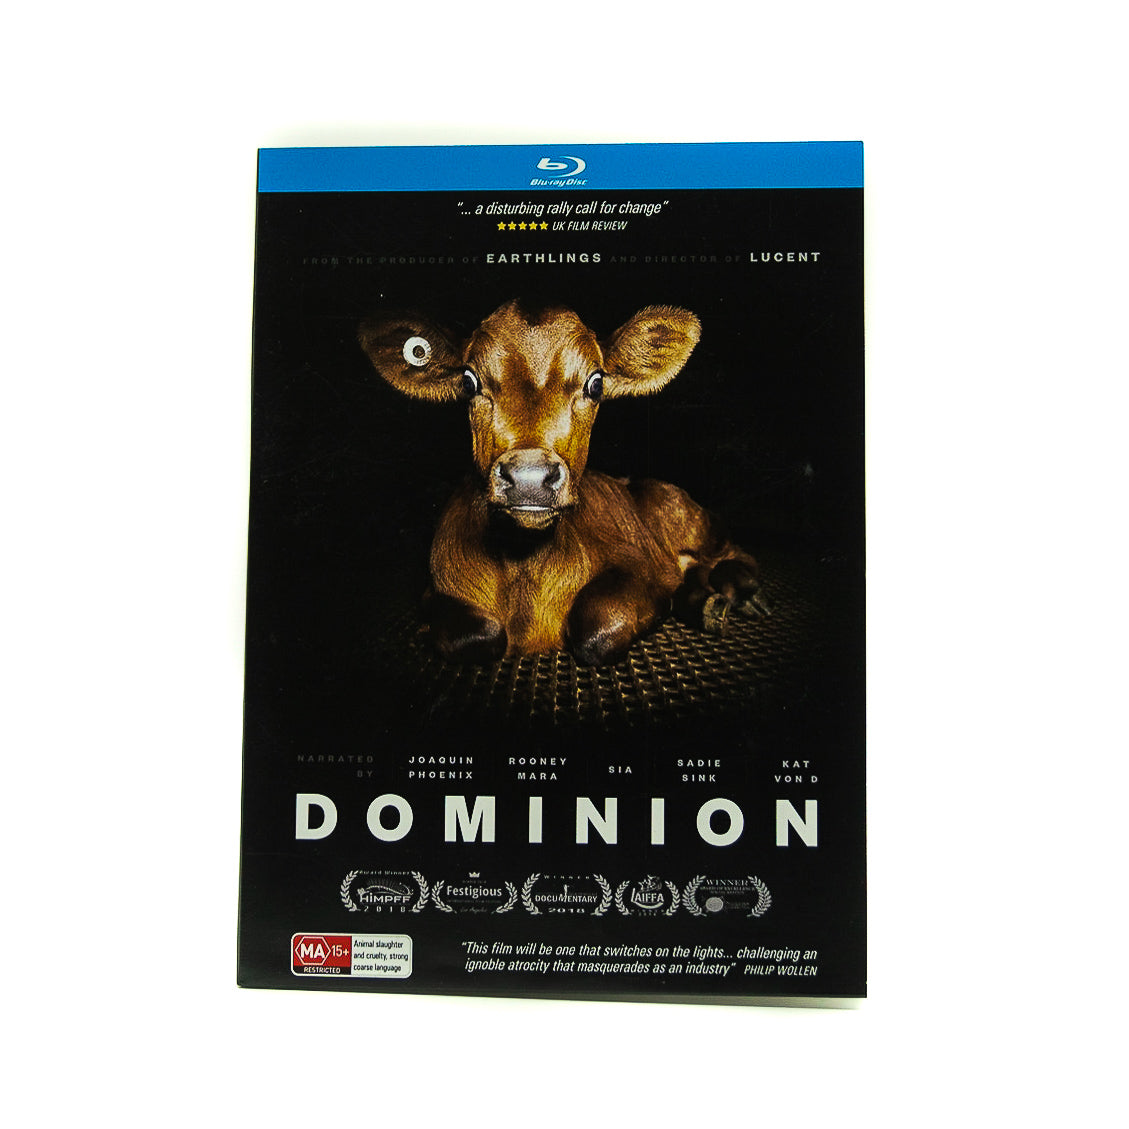 Série Dominion en DVD, Blu-ray & VOD